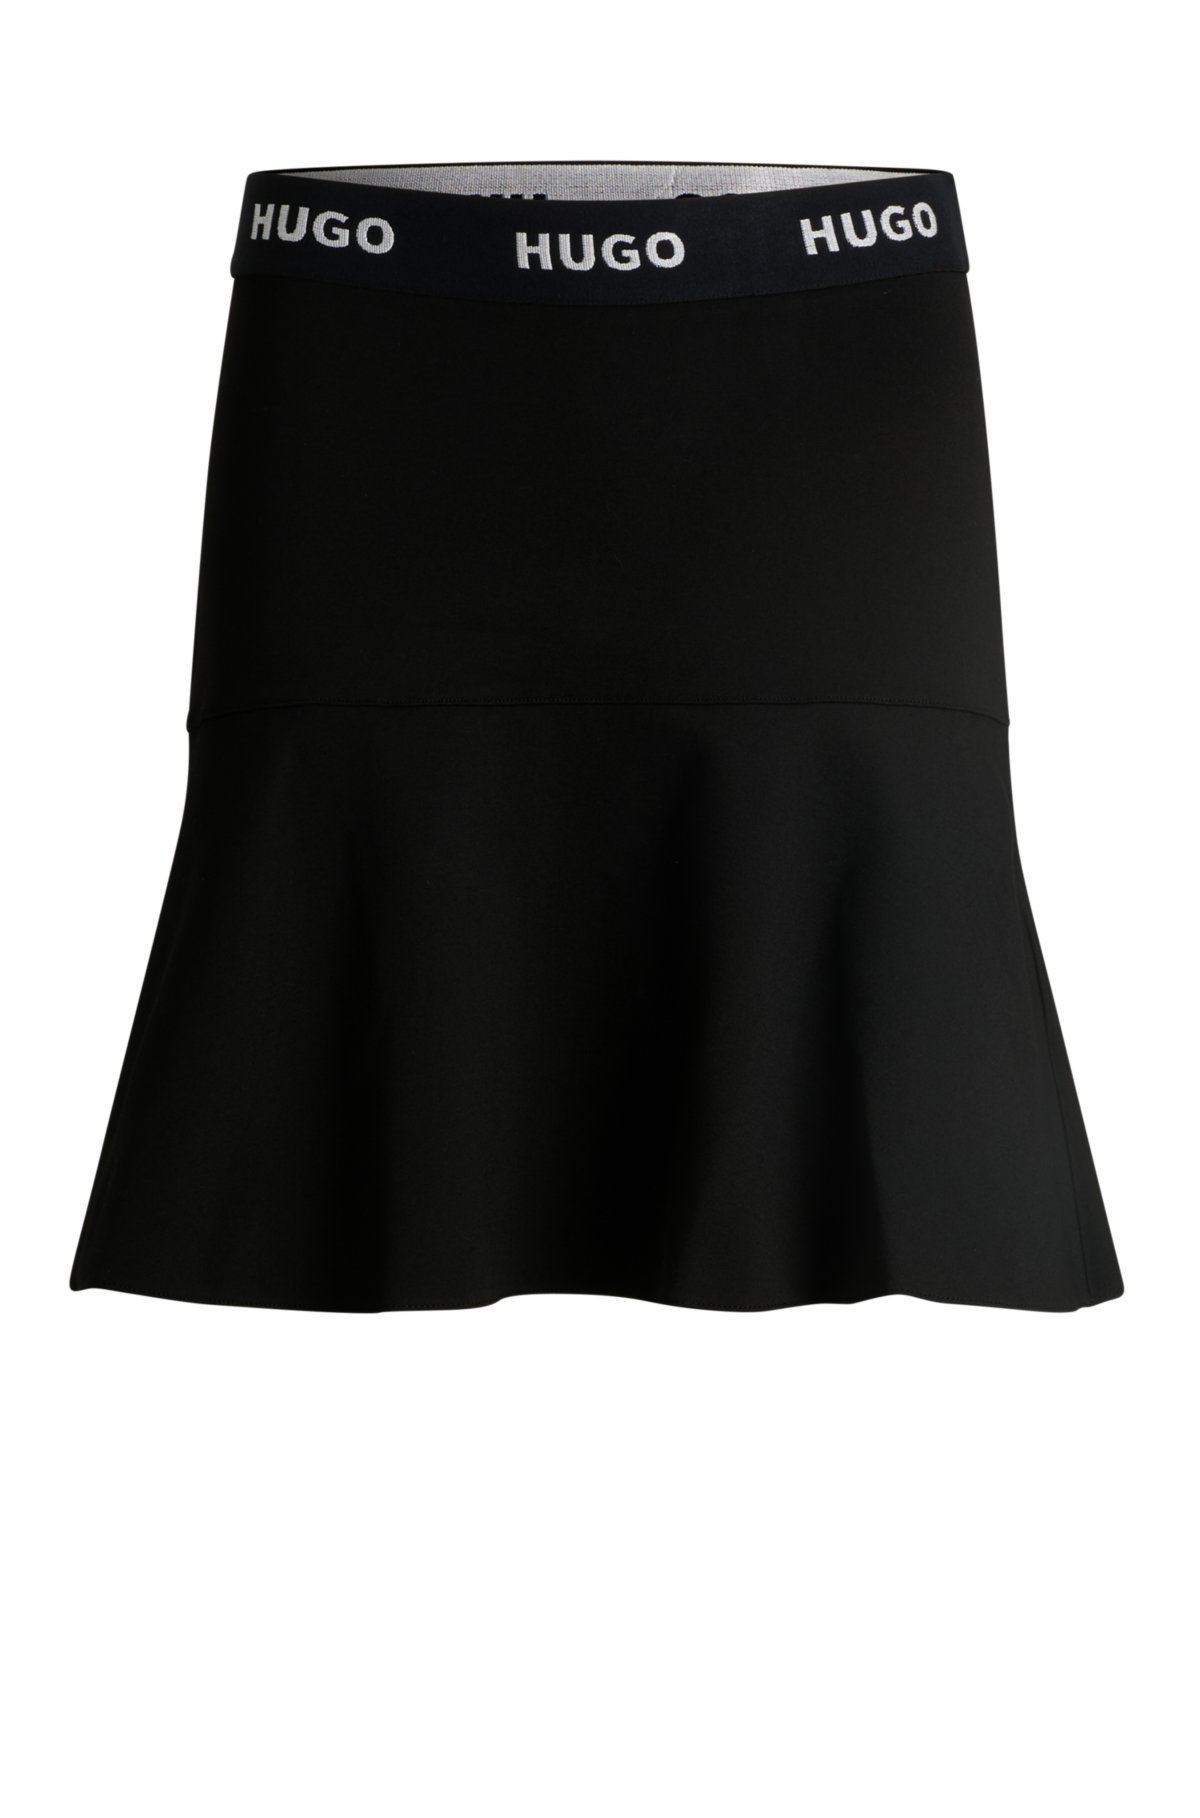 Jersey mini skirt with flounce hem, Black